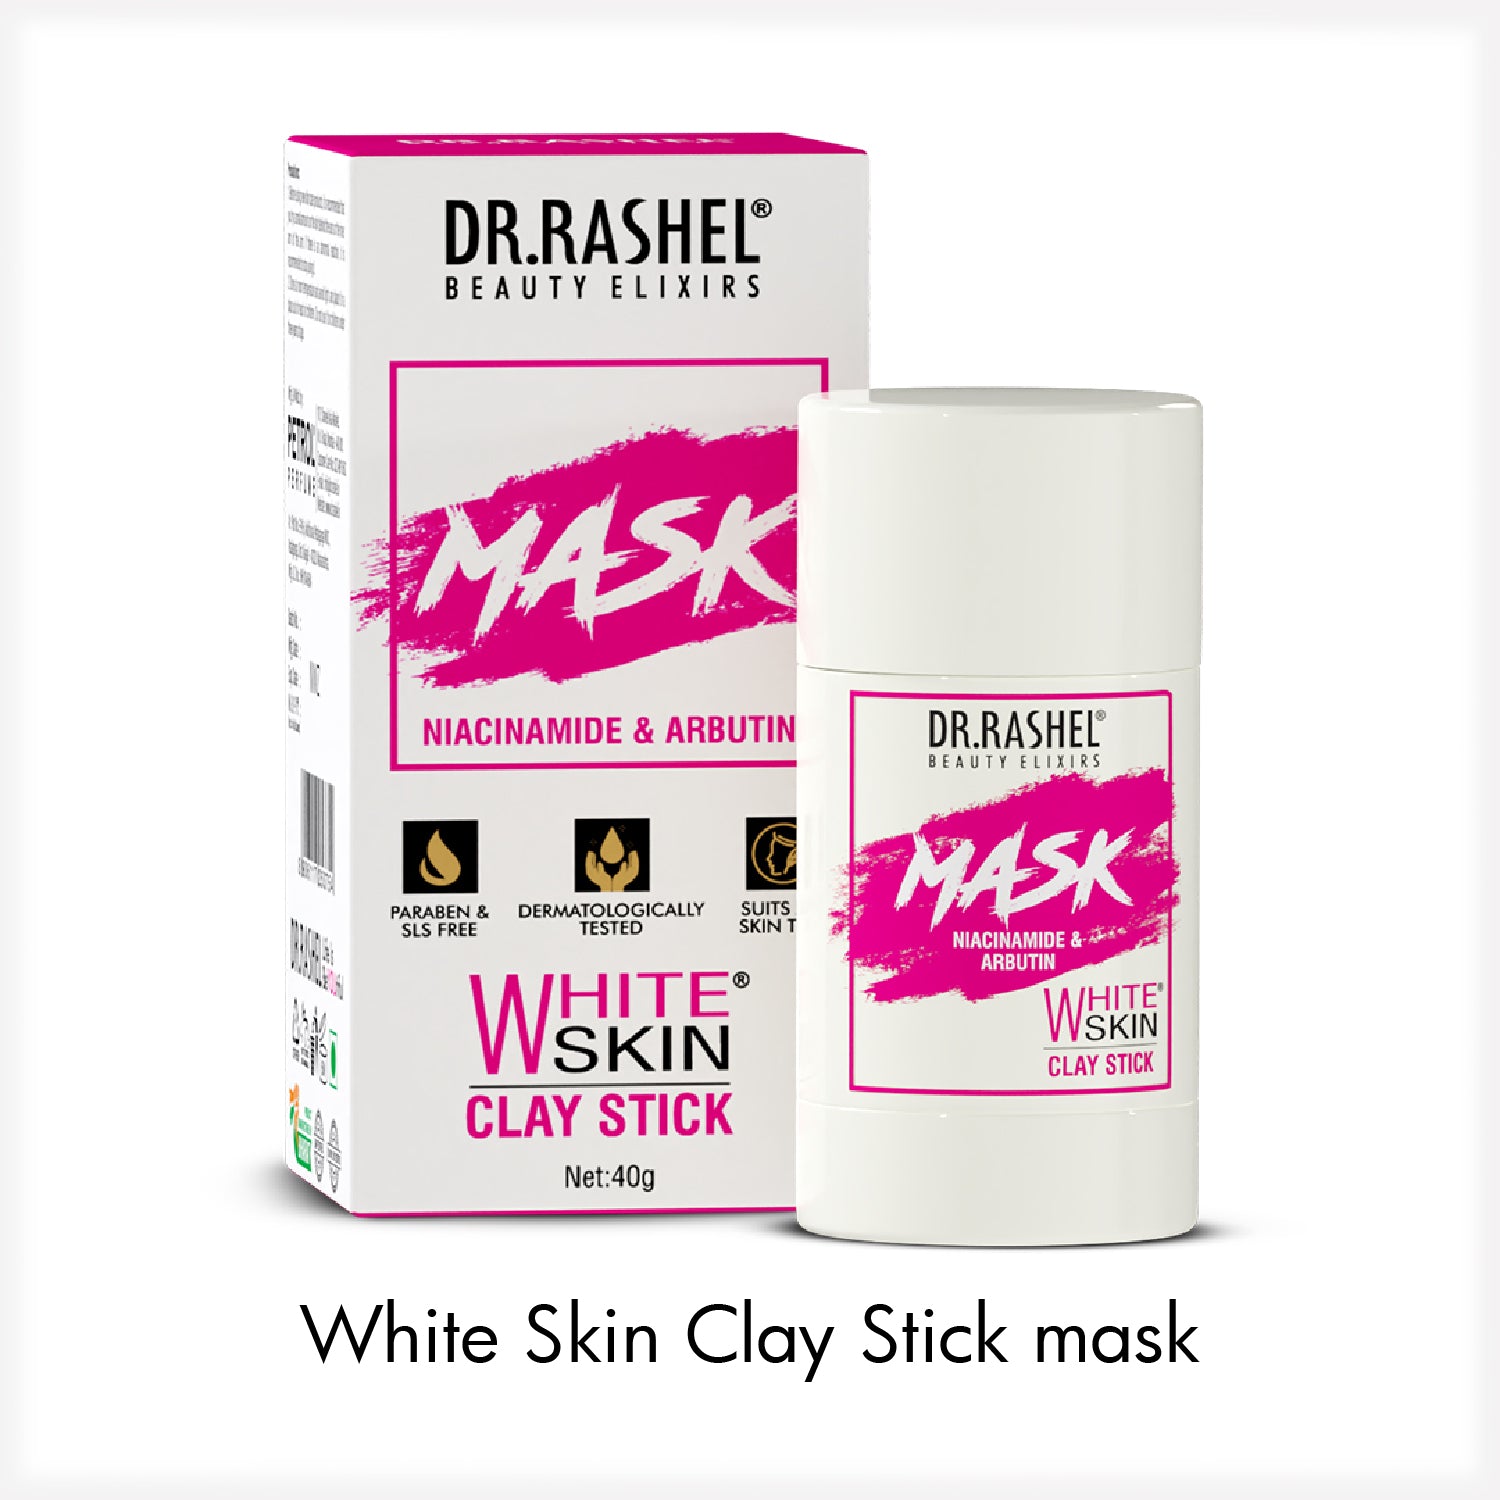 White Skin Clay Stick Mask for Pores